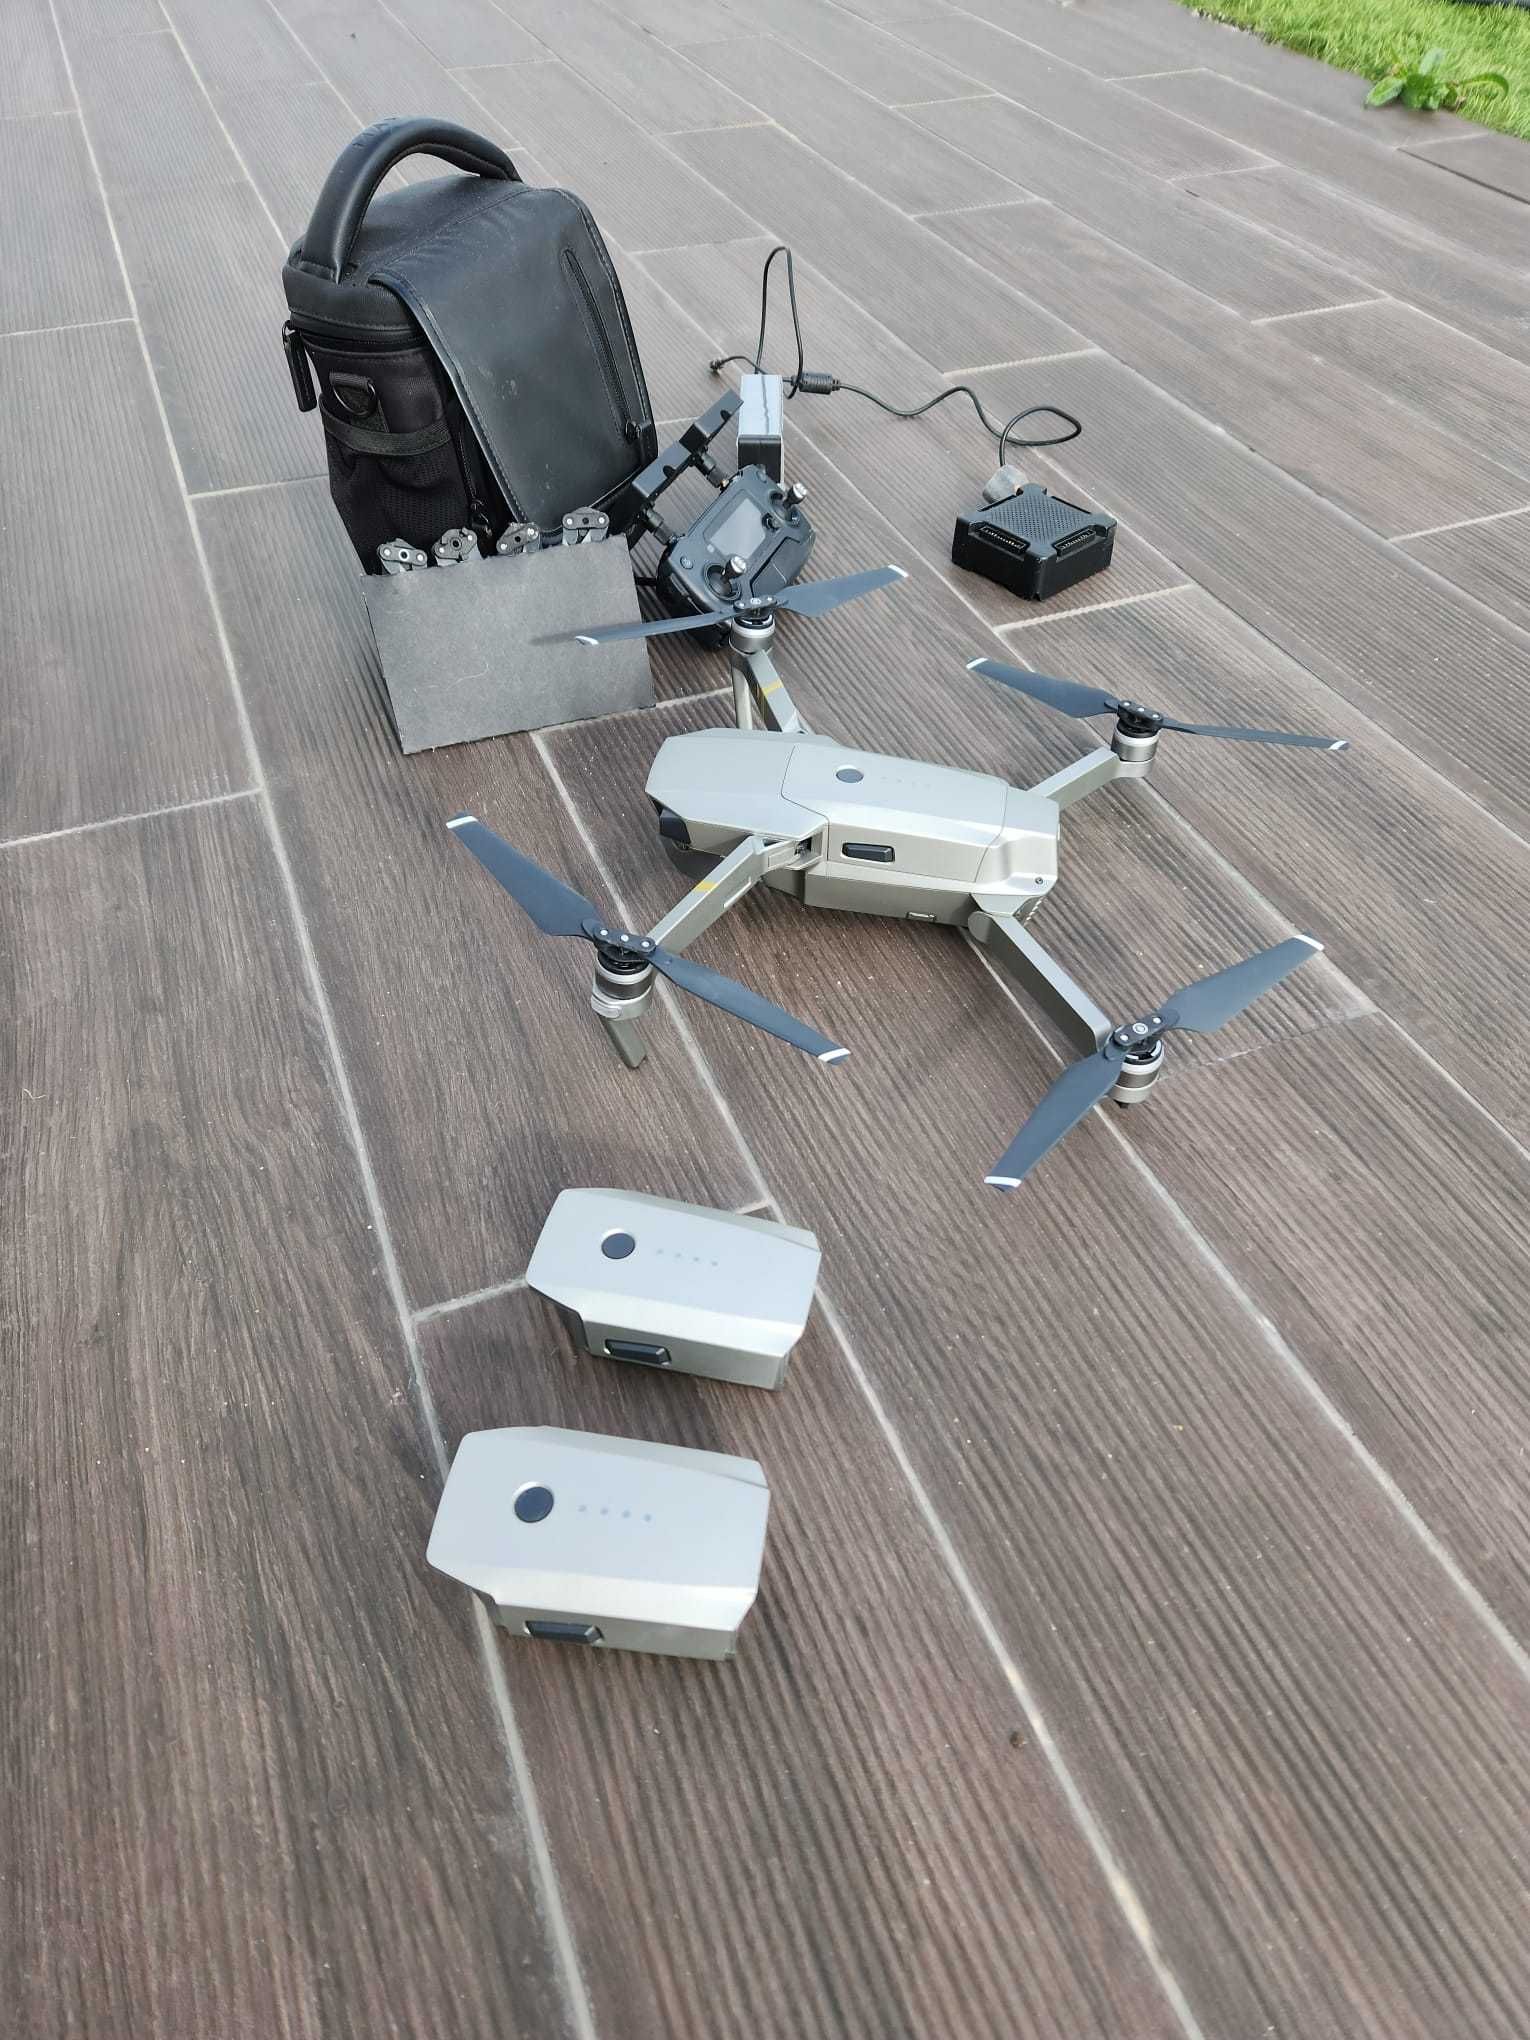 Drone Dji Mavic Pro Platinium Pouco uso Impecavel